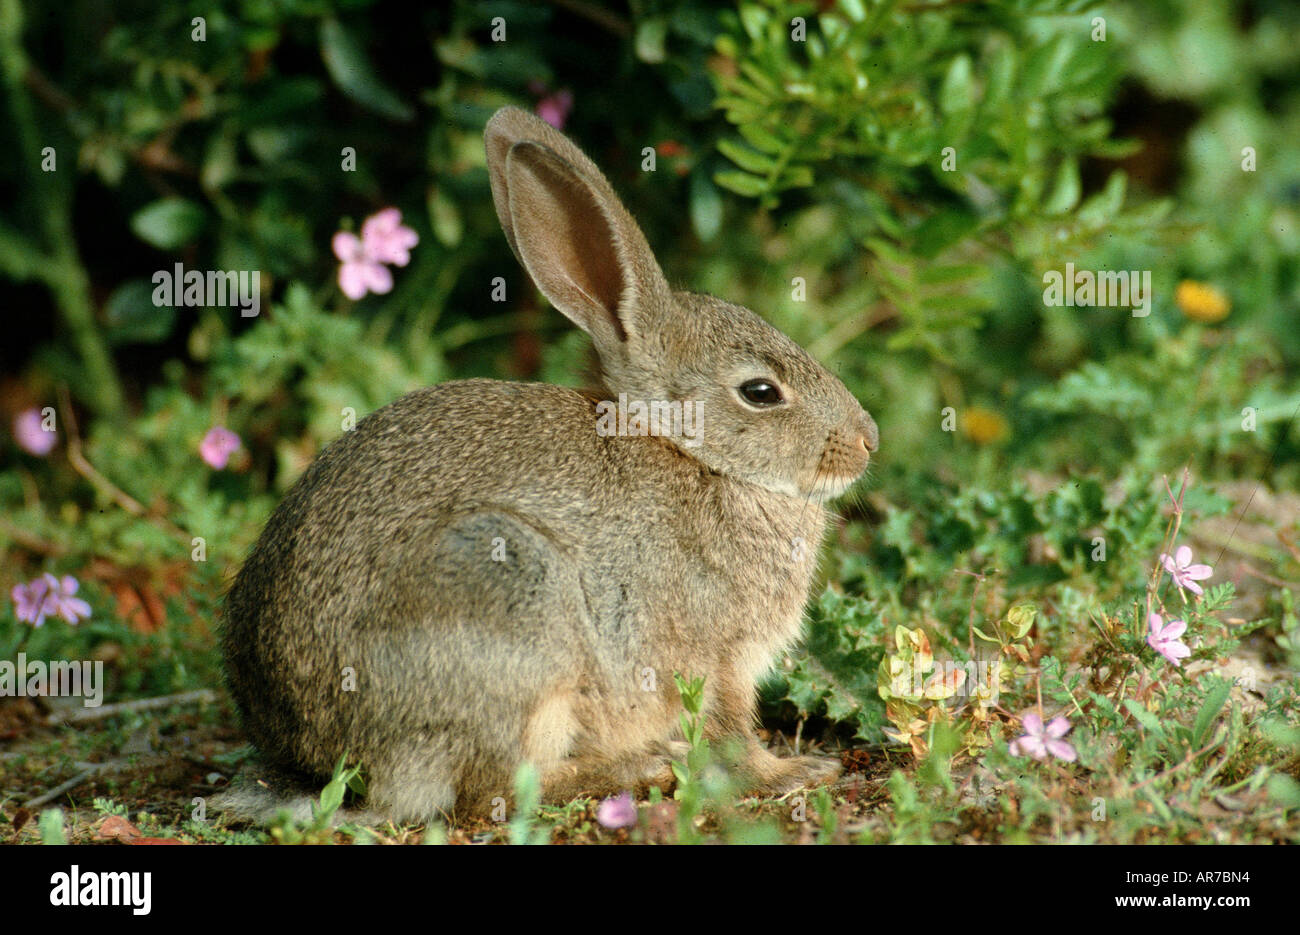 European Wild Rabbit, Wildkaninchen, Germany, Oryctolagus cuniculus Stock Photo